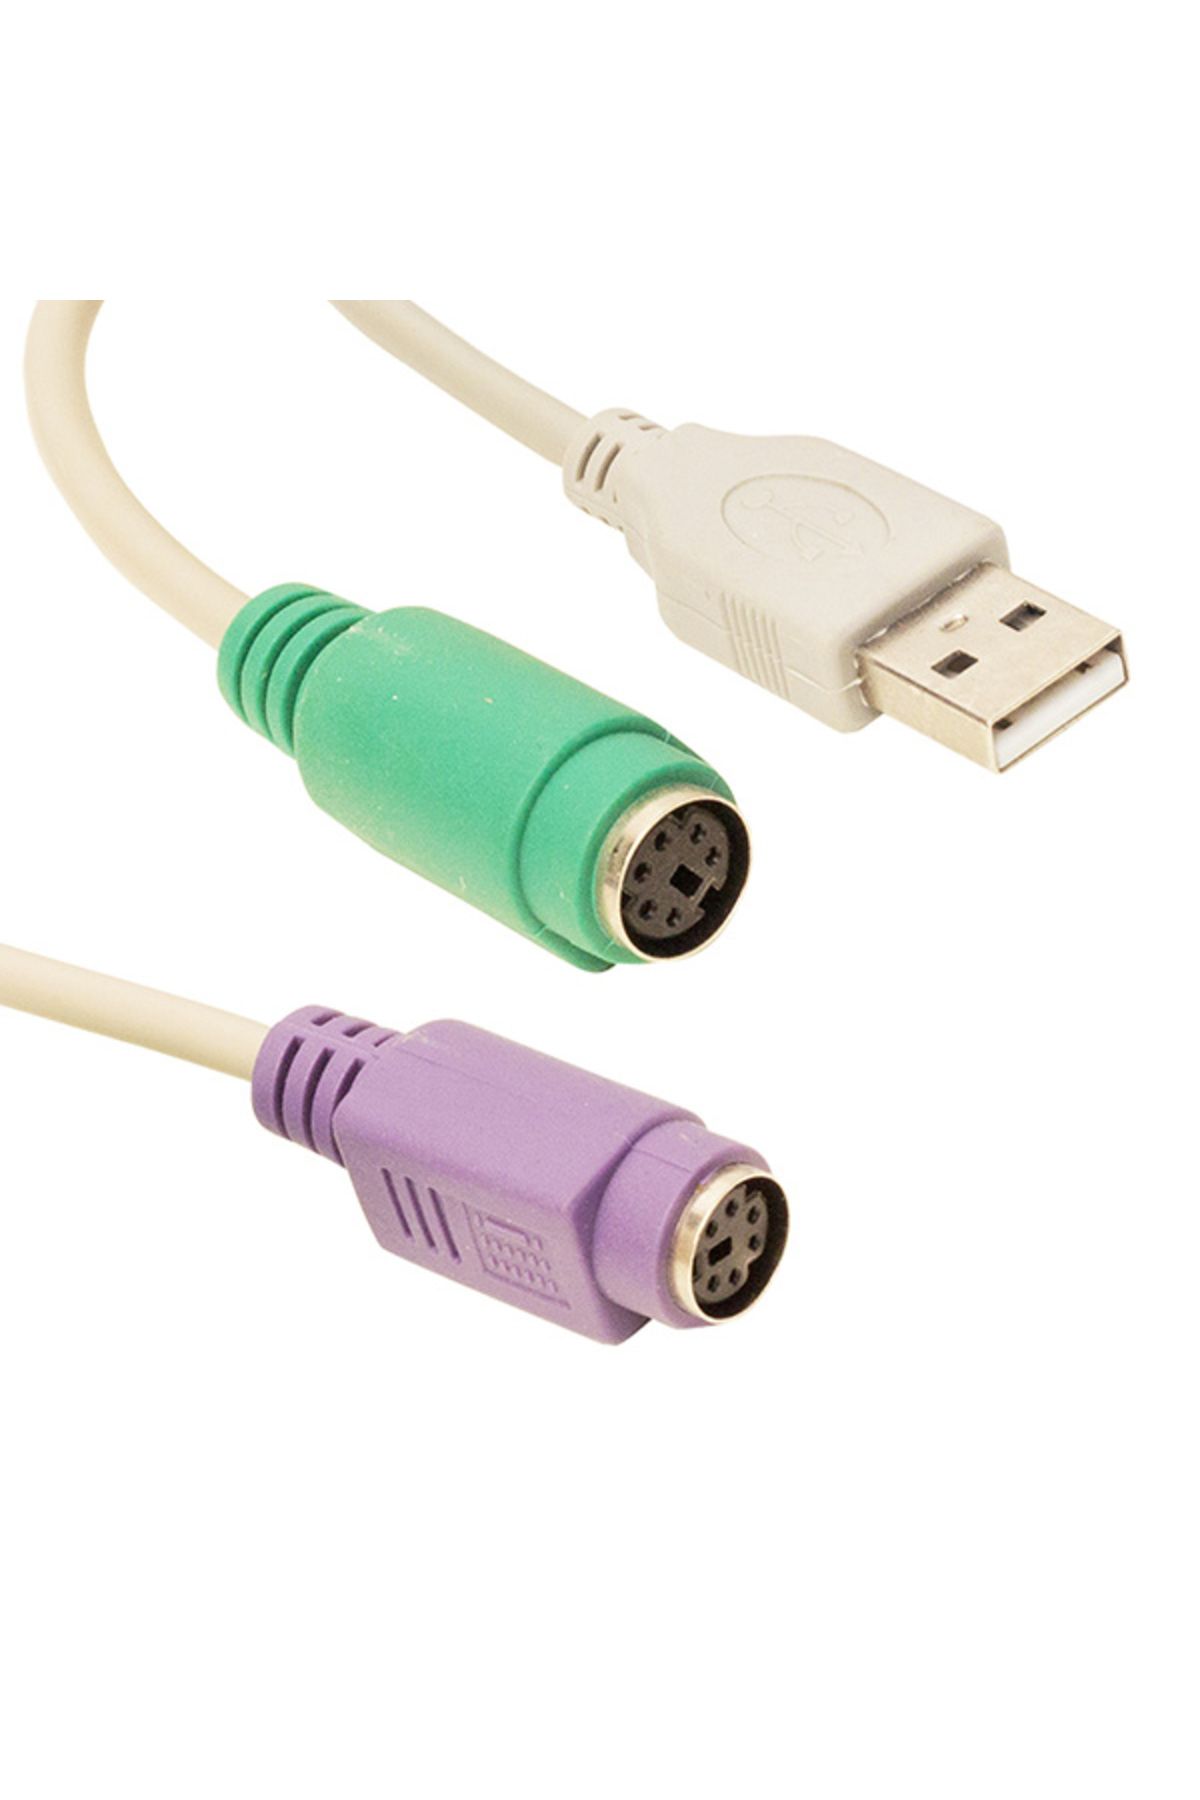 Genel Markalar USB TO PS2 KLAVYE/MOUSE ÇEVİRİCİ (4199)